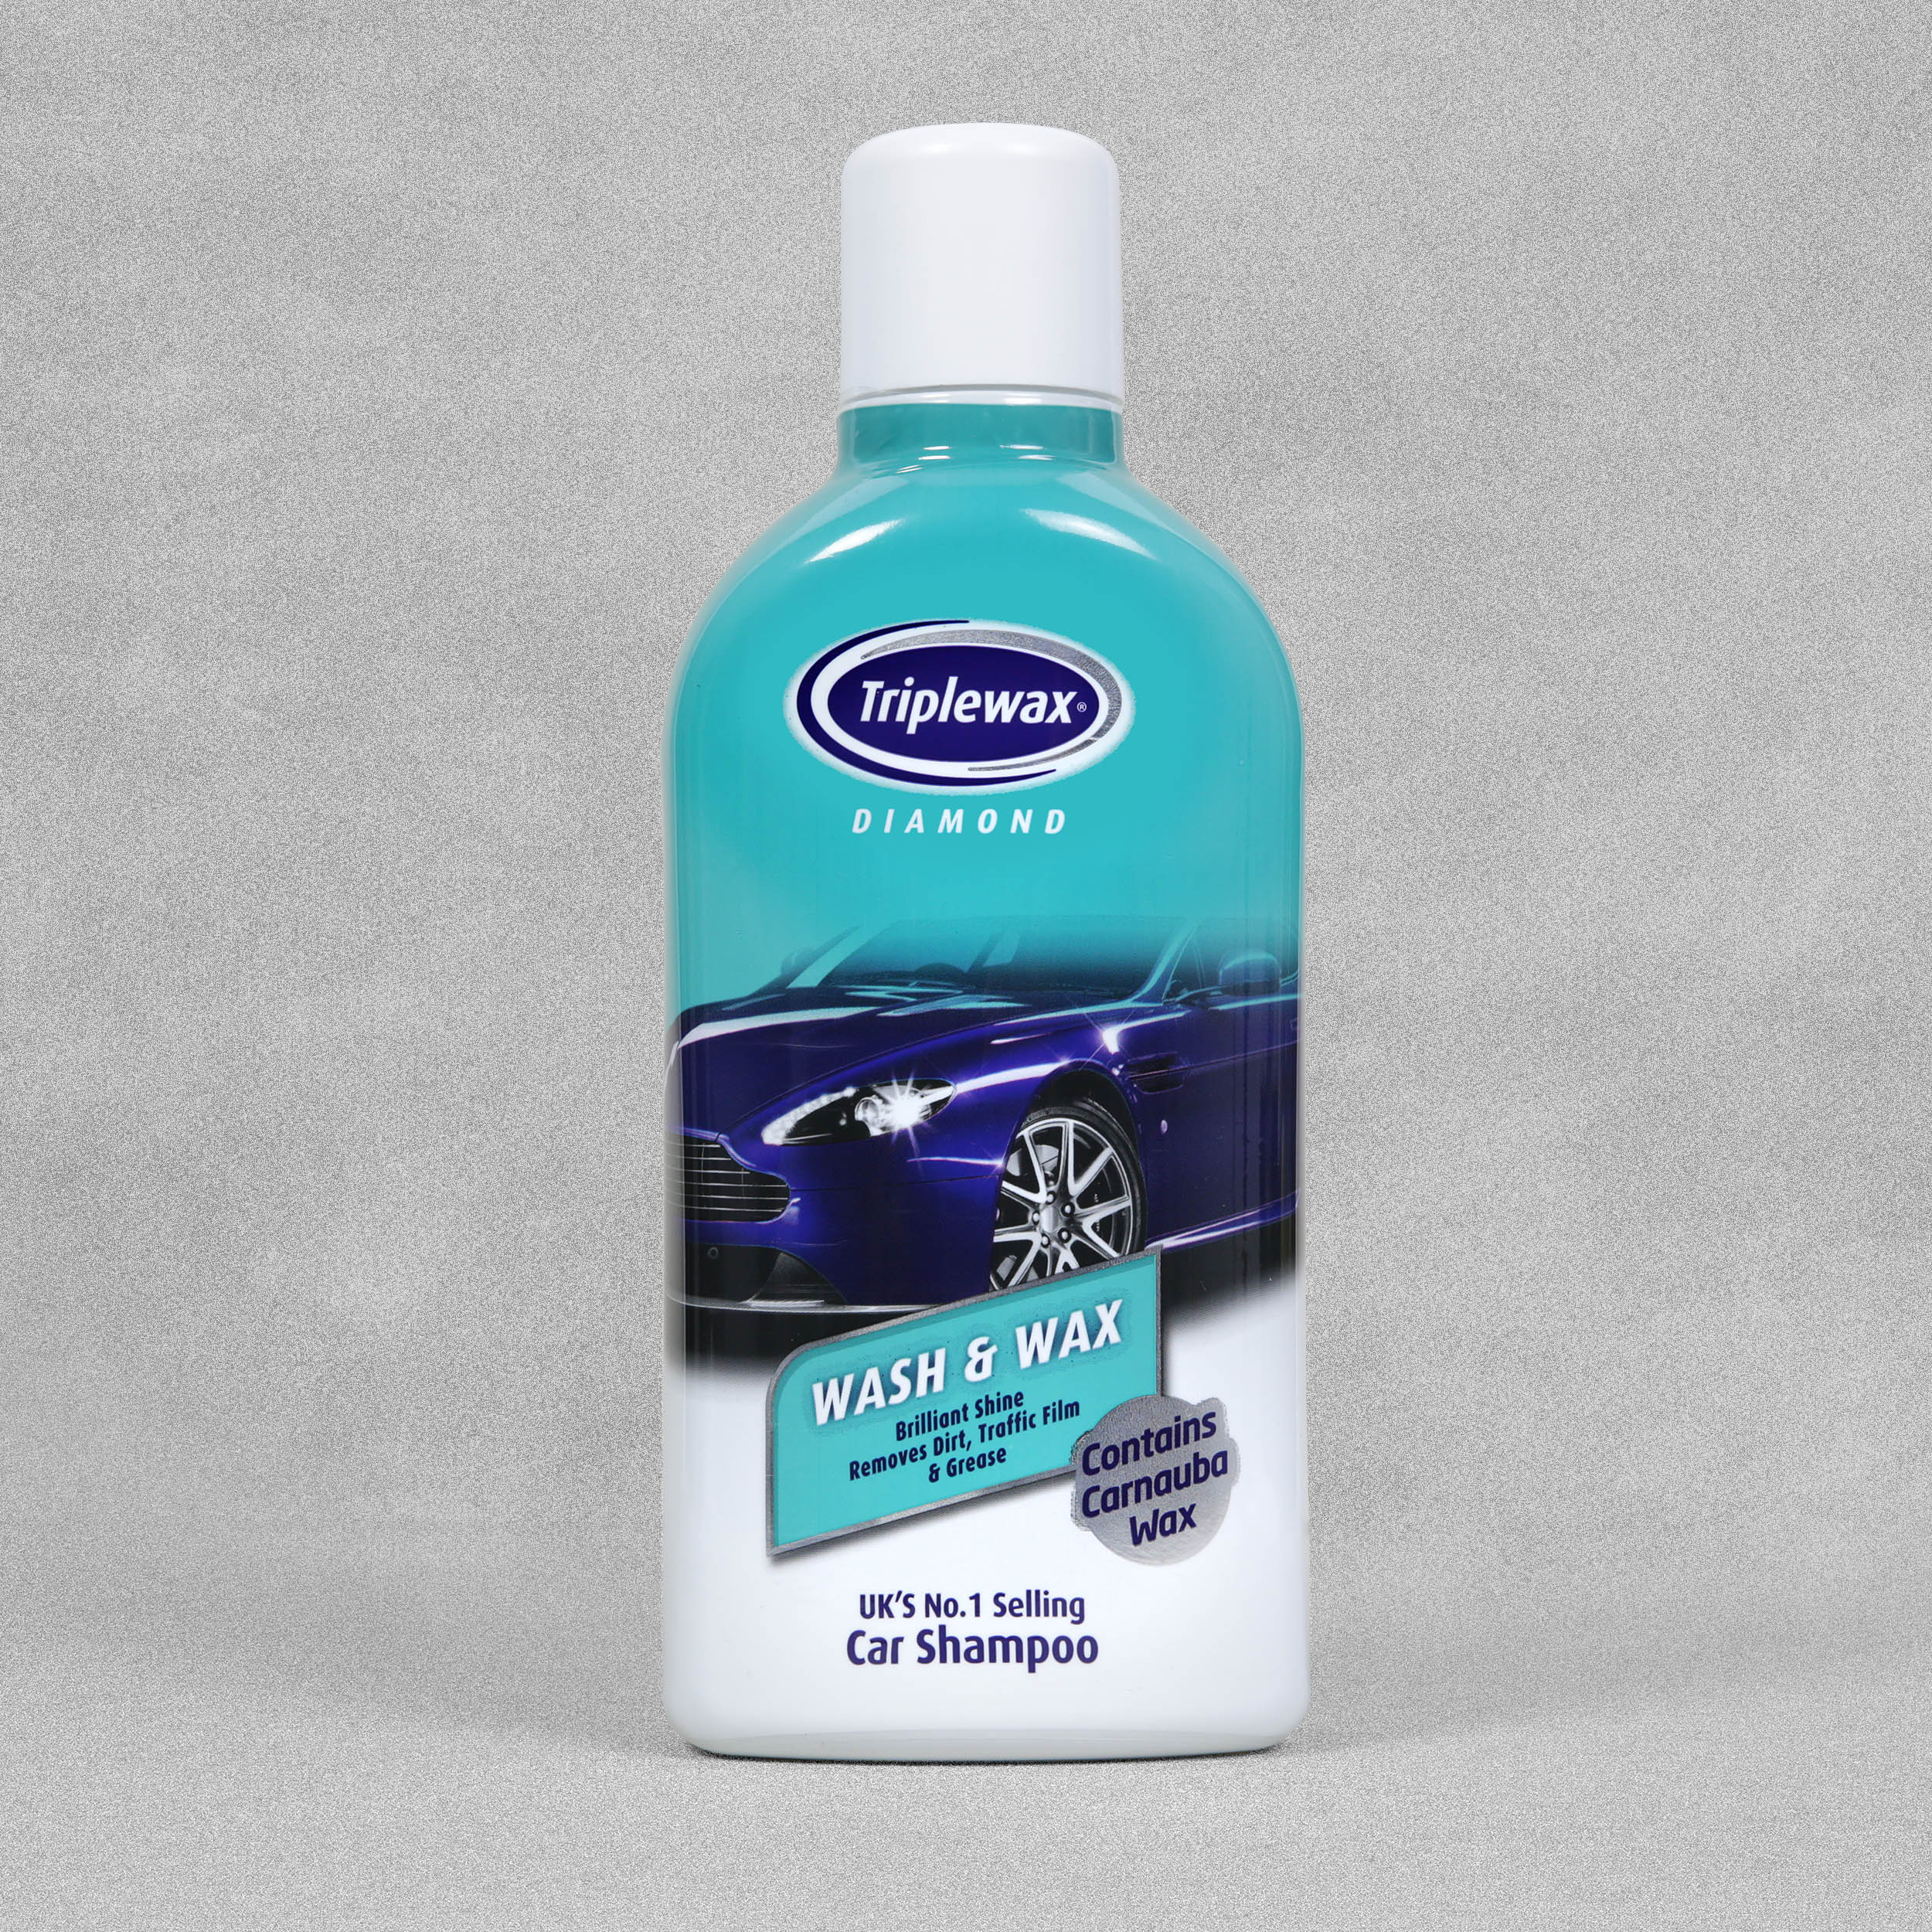 Triplewax Diamond Wash & Wax Car Shampoo 1 Litre